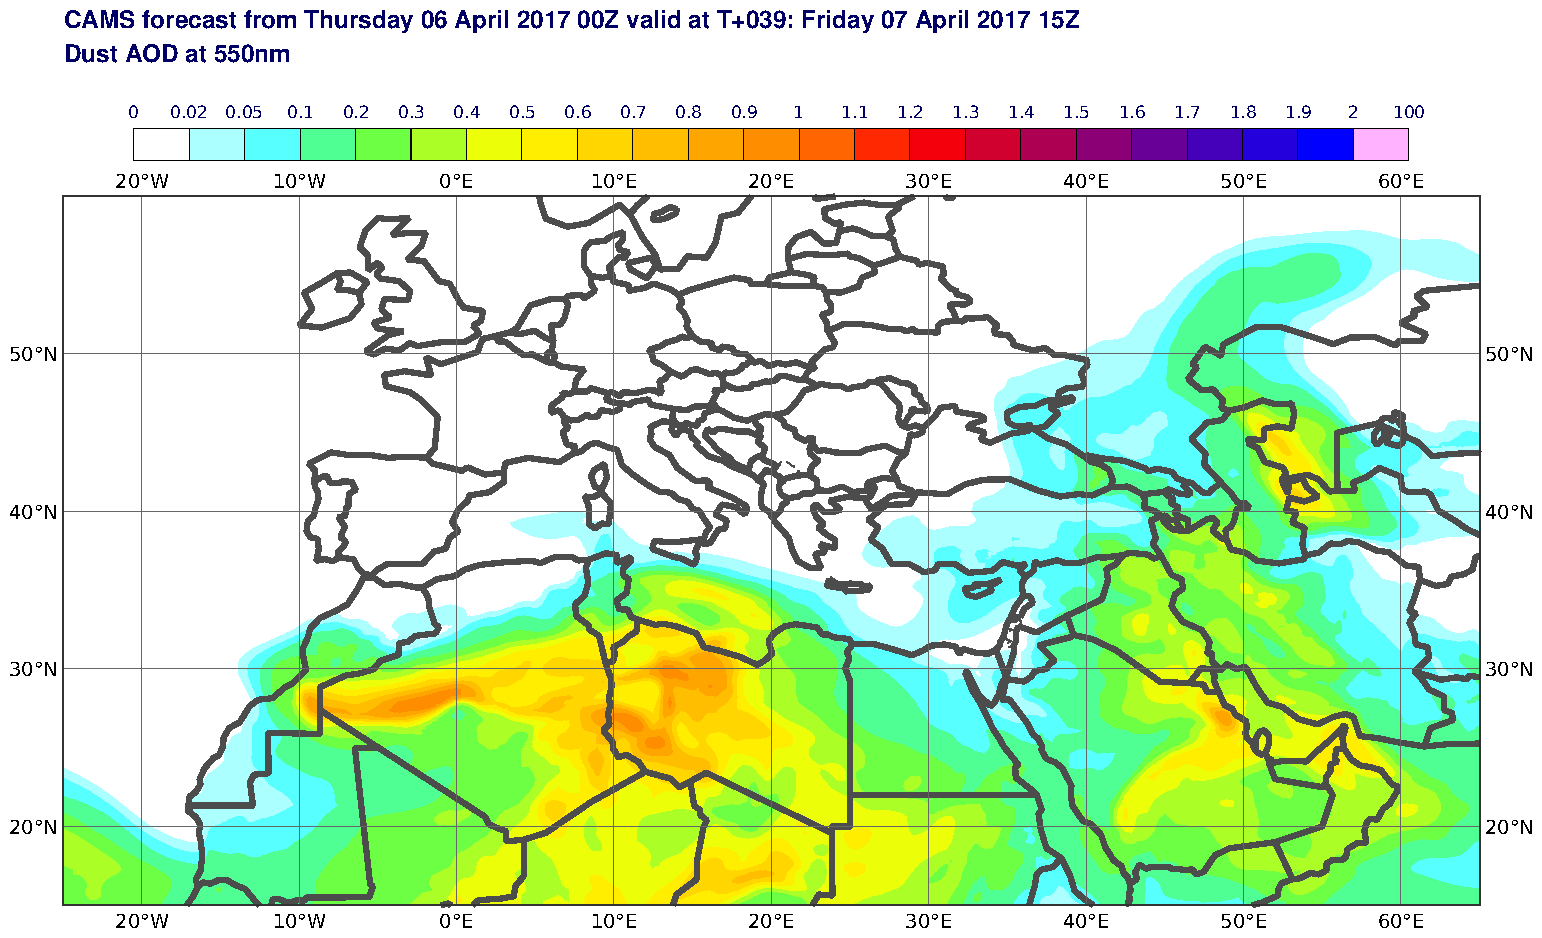 Dust AOD at 550nm valid at T39 - 2017-04-07 15:00